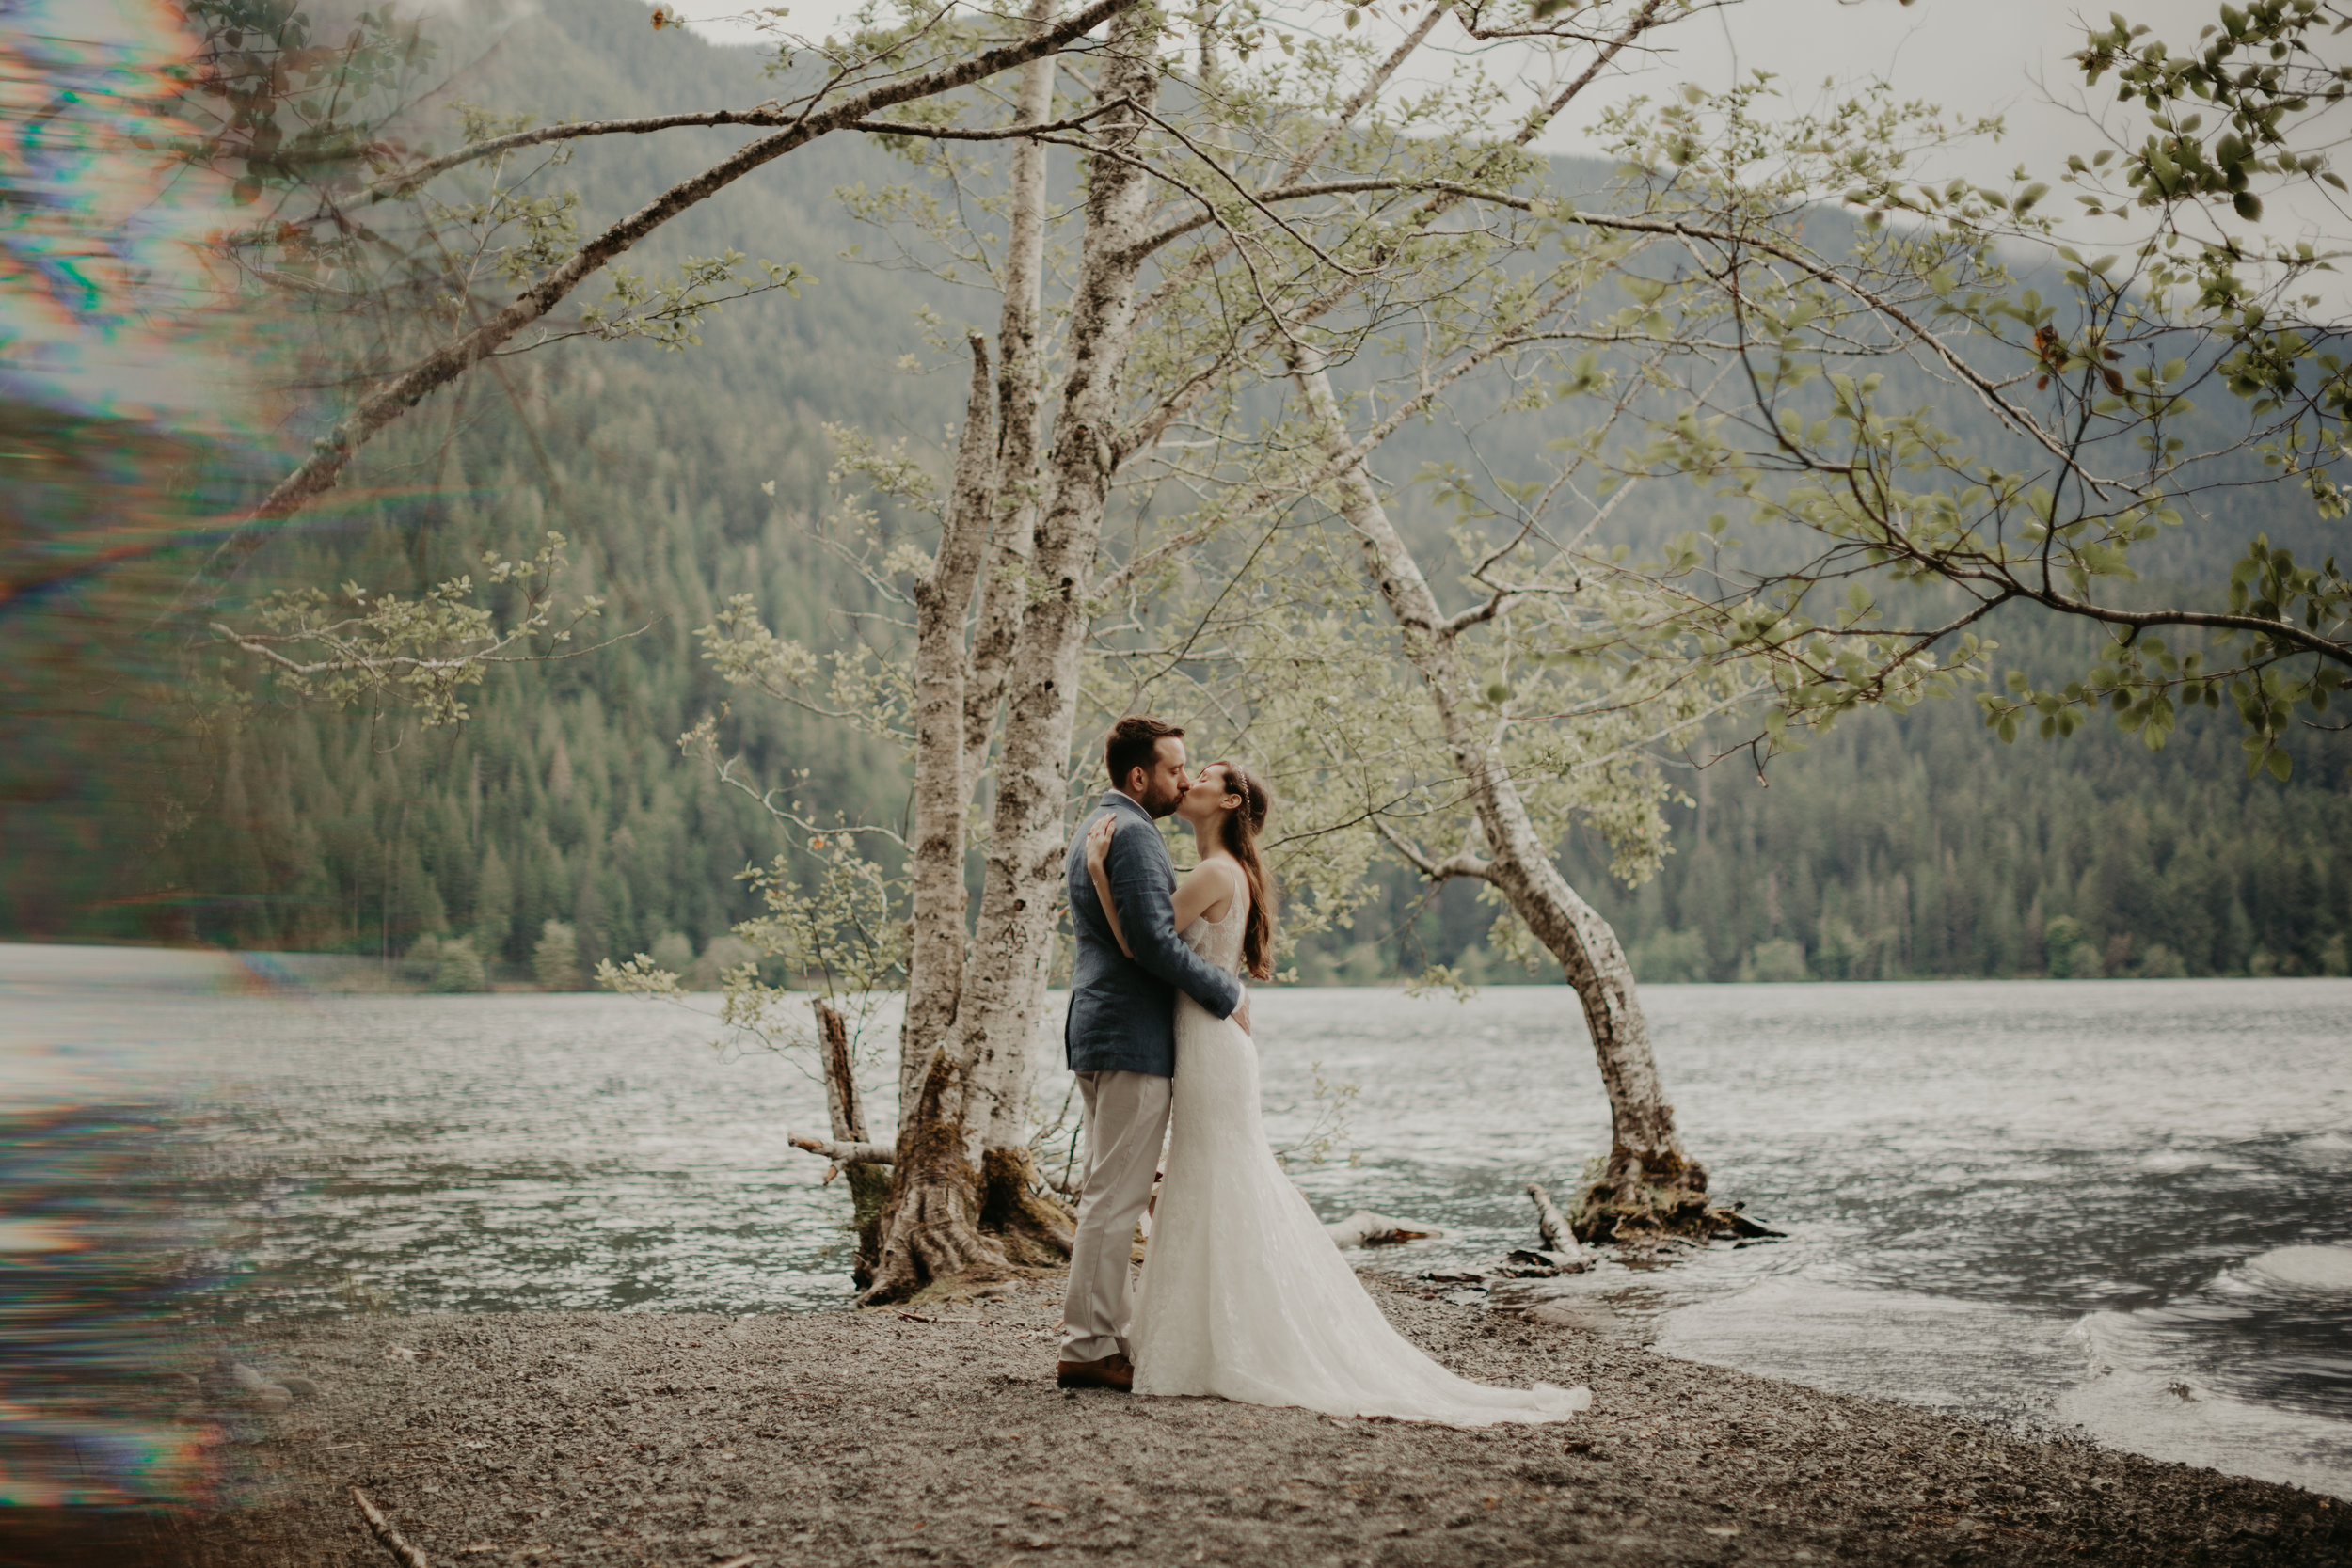 PNW-elopement-wedding-engagement-olympic national park-port angeles-hurricane ridge-lake crescent-kayla dawn photography- photographer-photography-kayladawnphoto-247.jpg